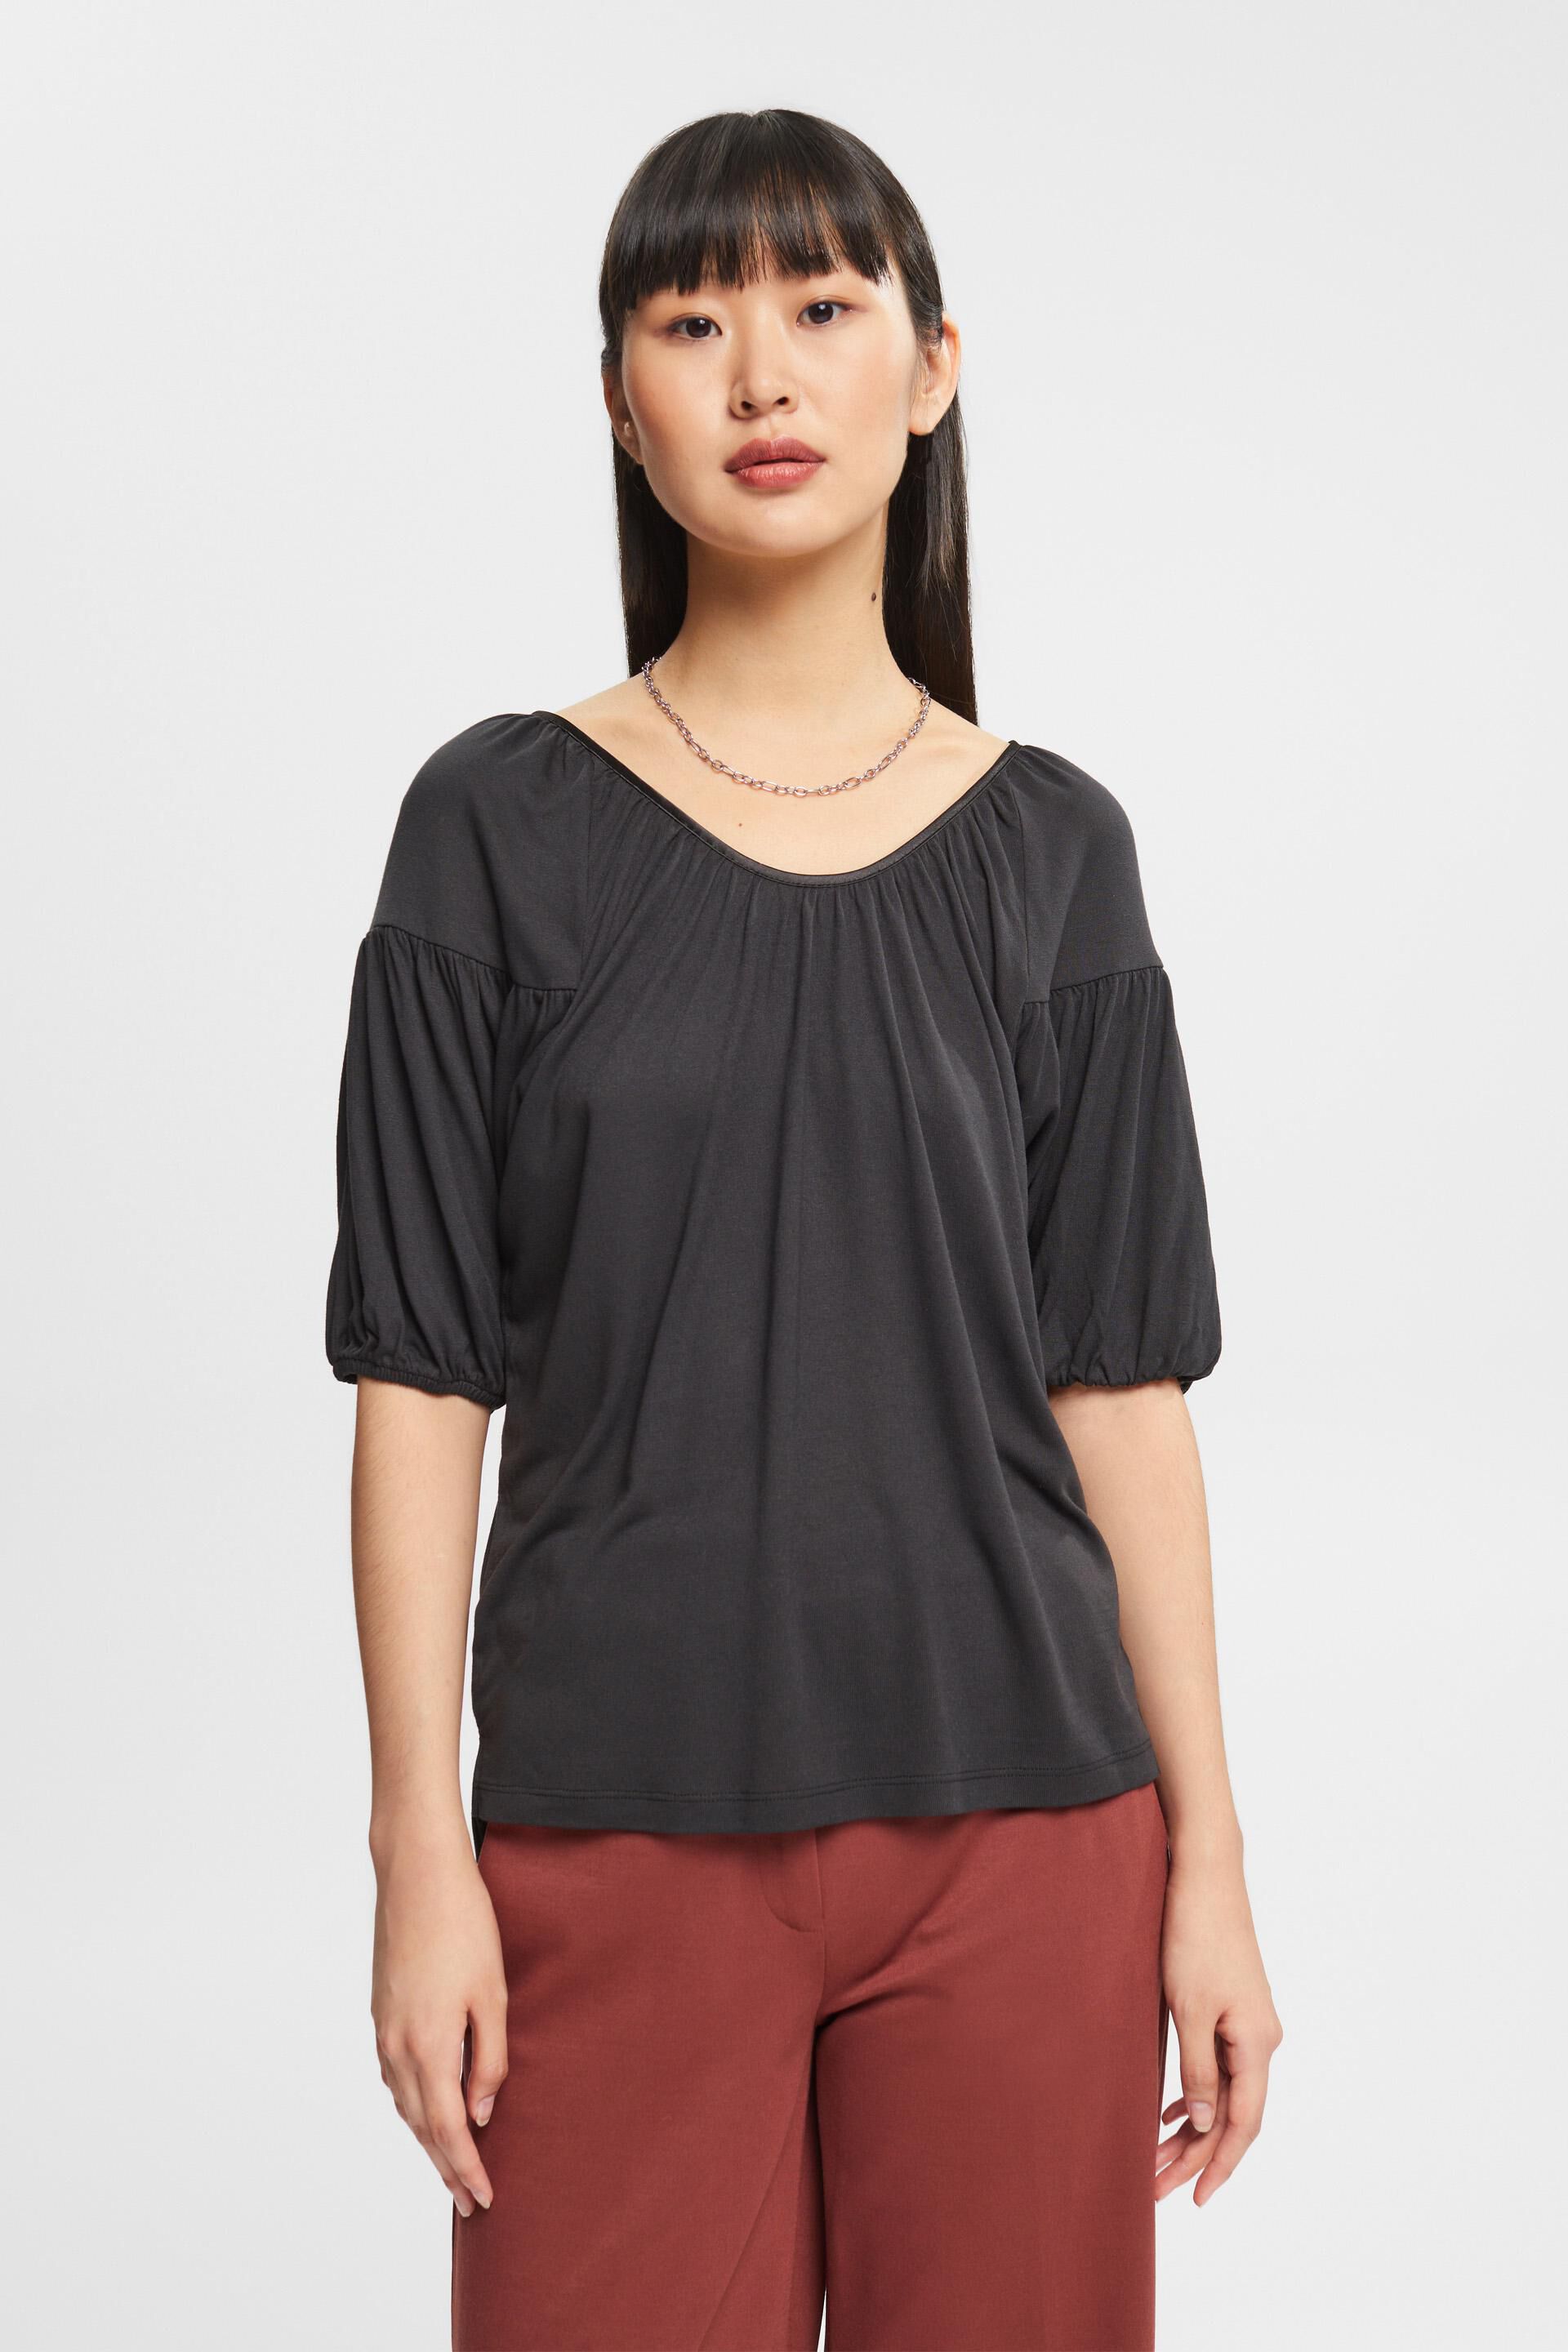 Esprit Transparante blouse lichtgrijs-wit volledige print casual uitstraling Mode Blouses Transparante blousen 